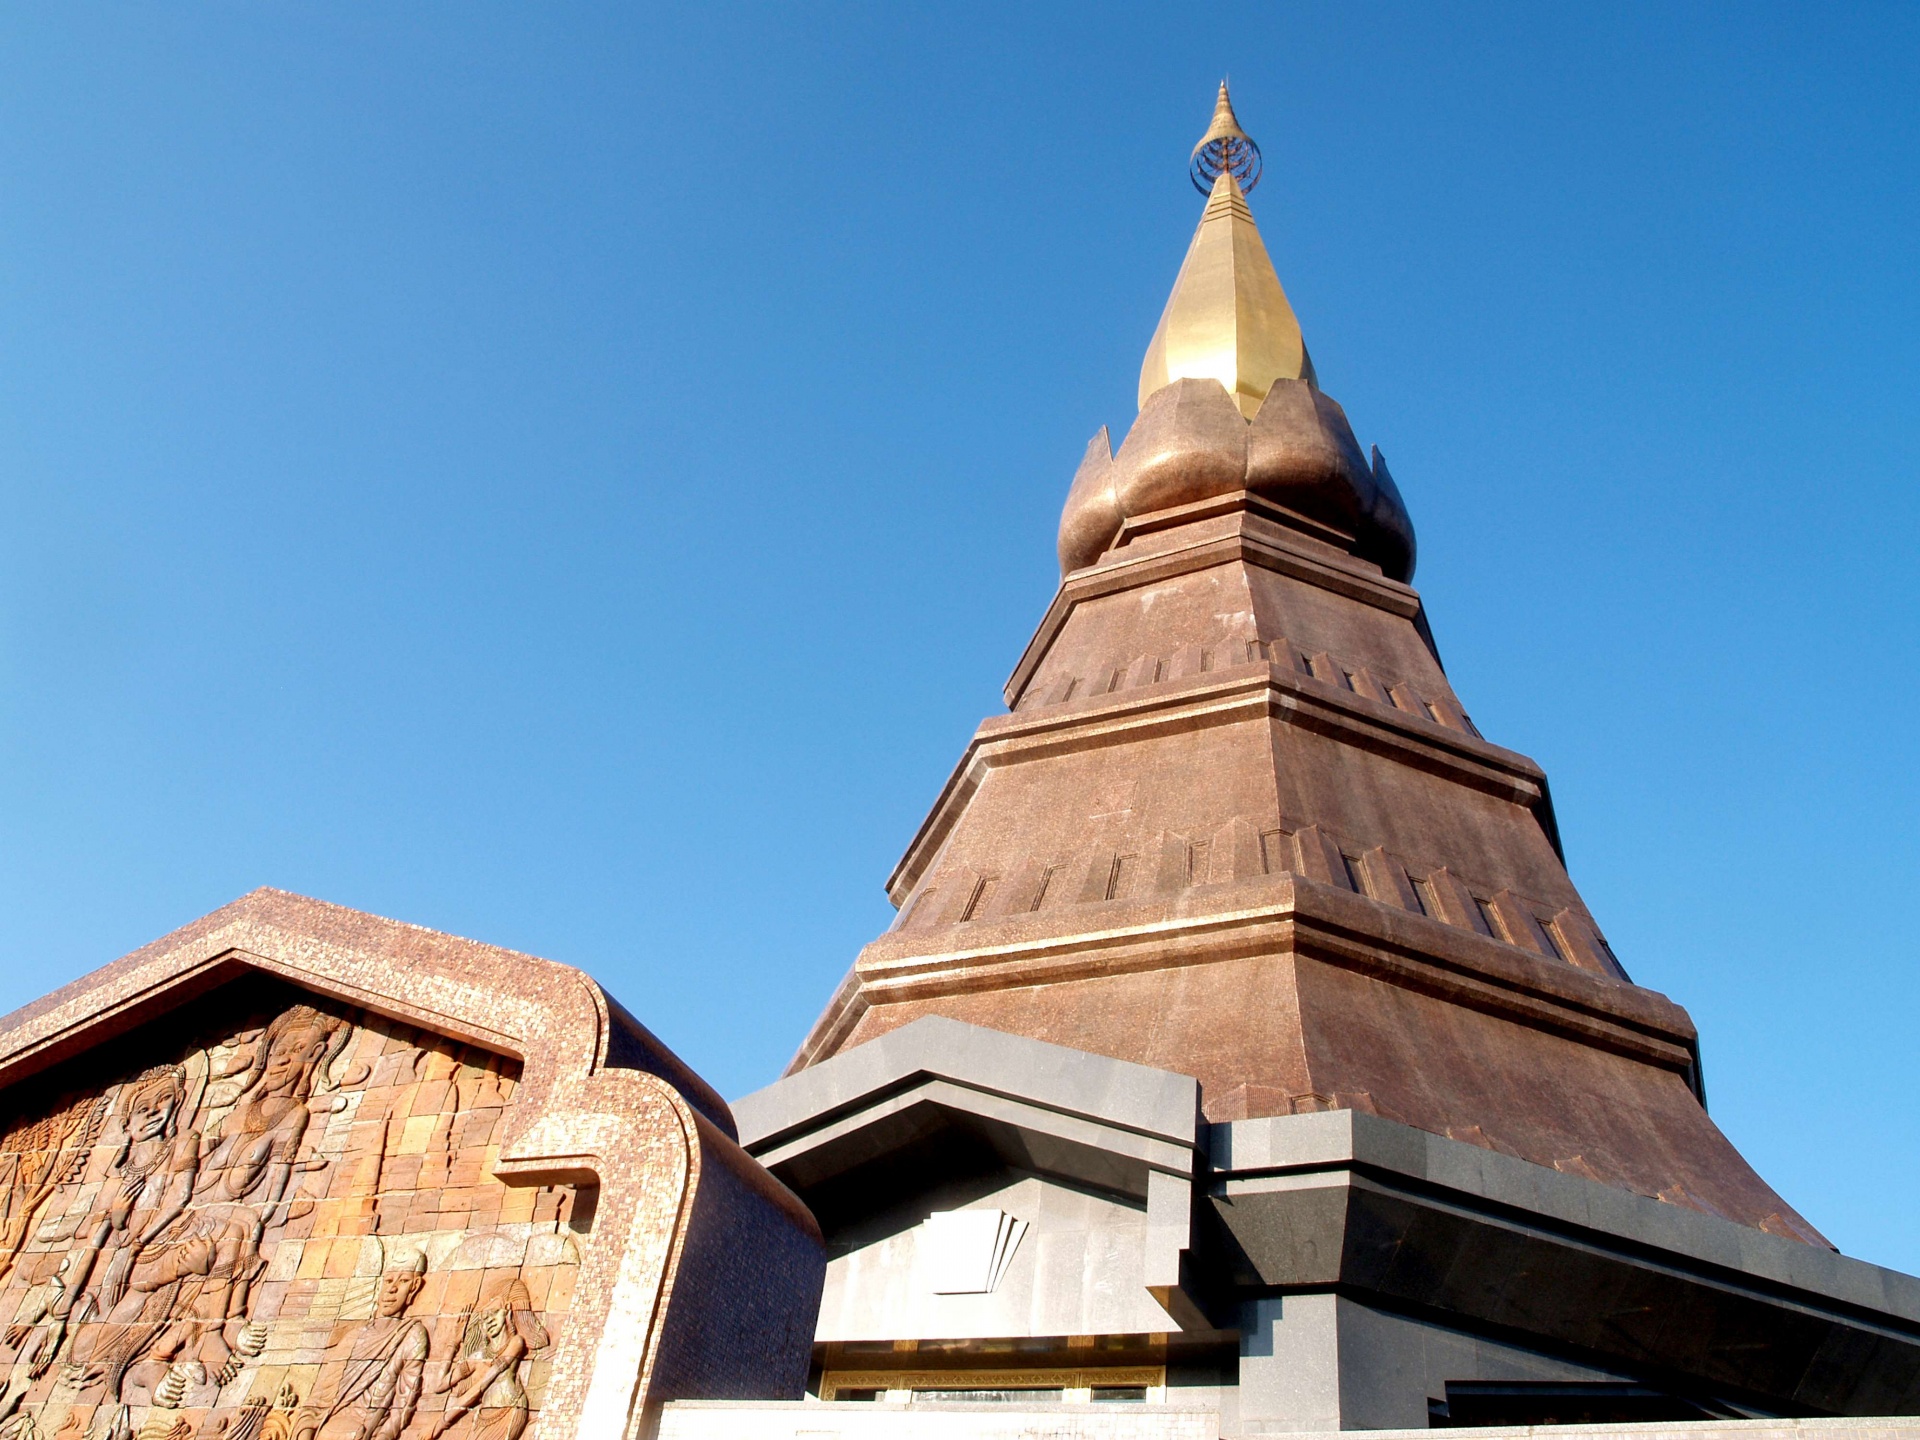 pagoda-doi-inthanon-chiang-mai-thailand-1592375778056.jpg